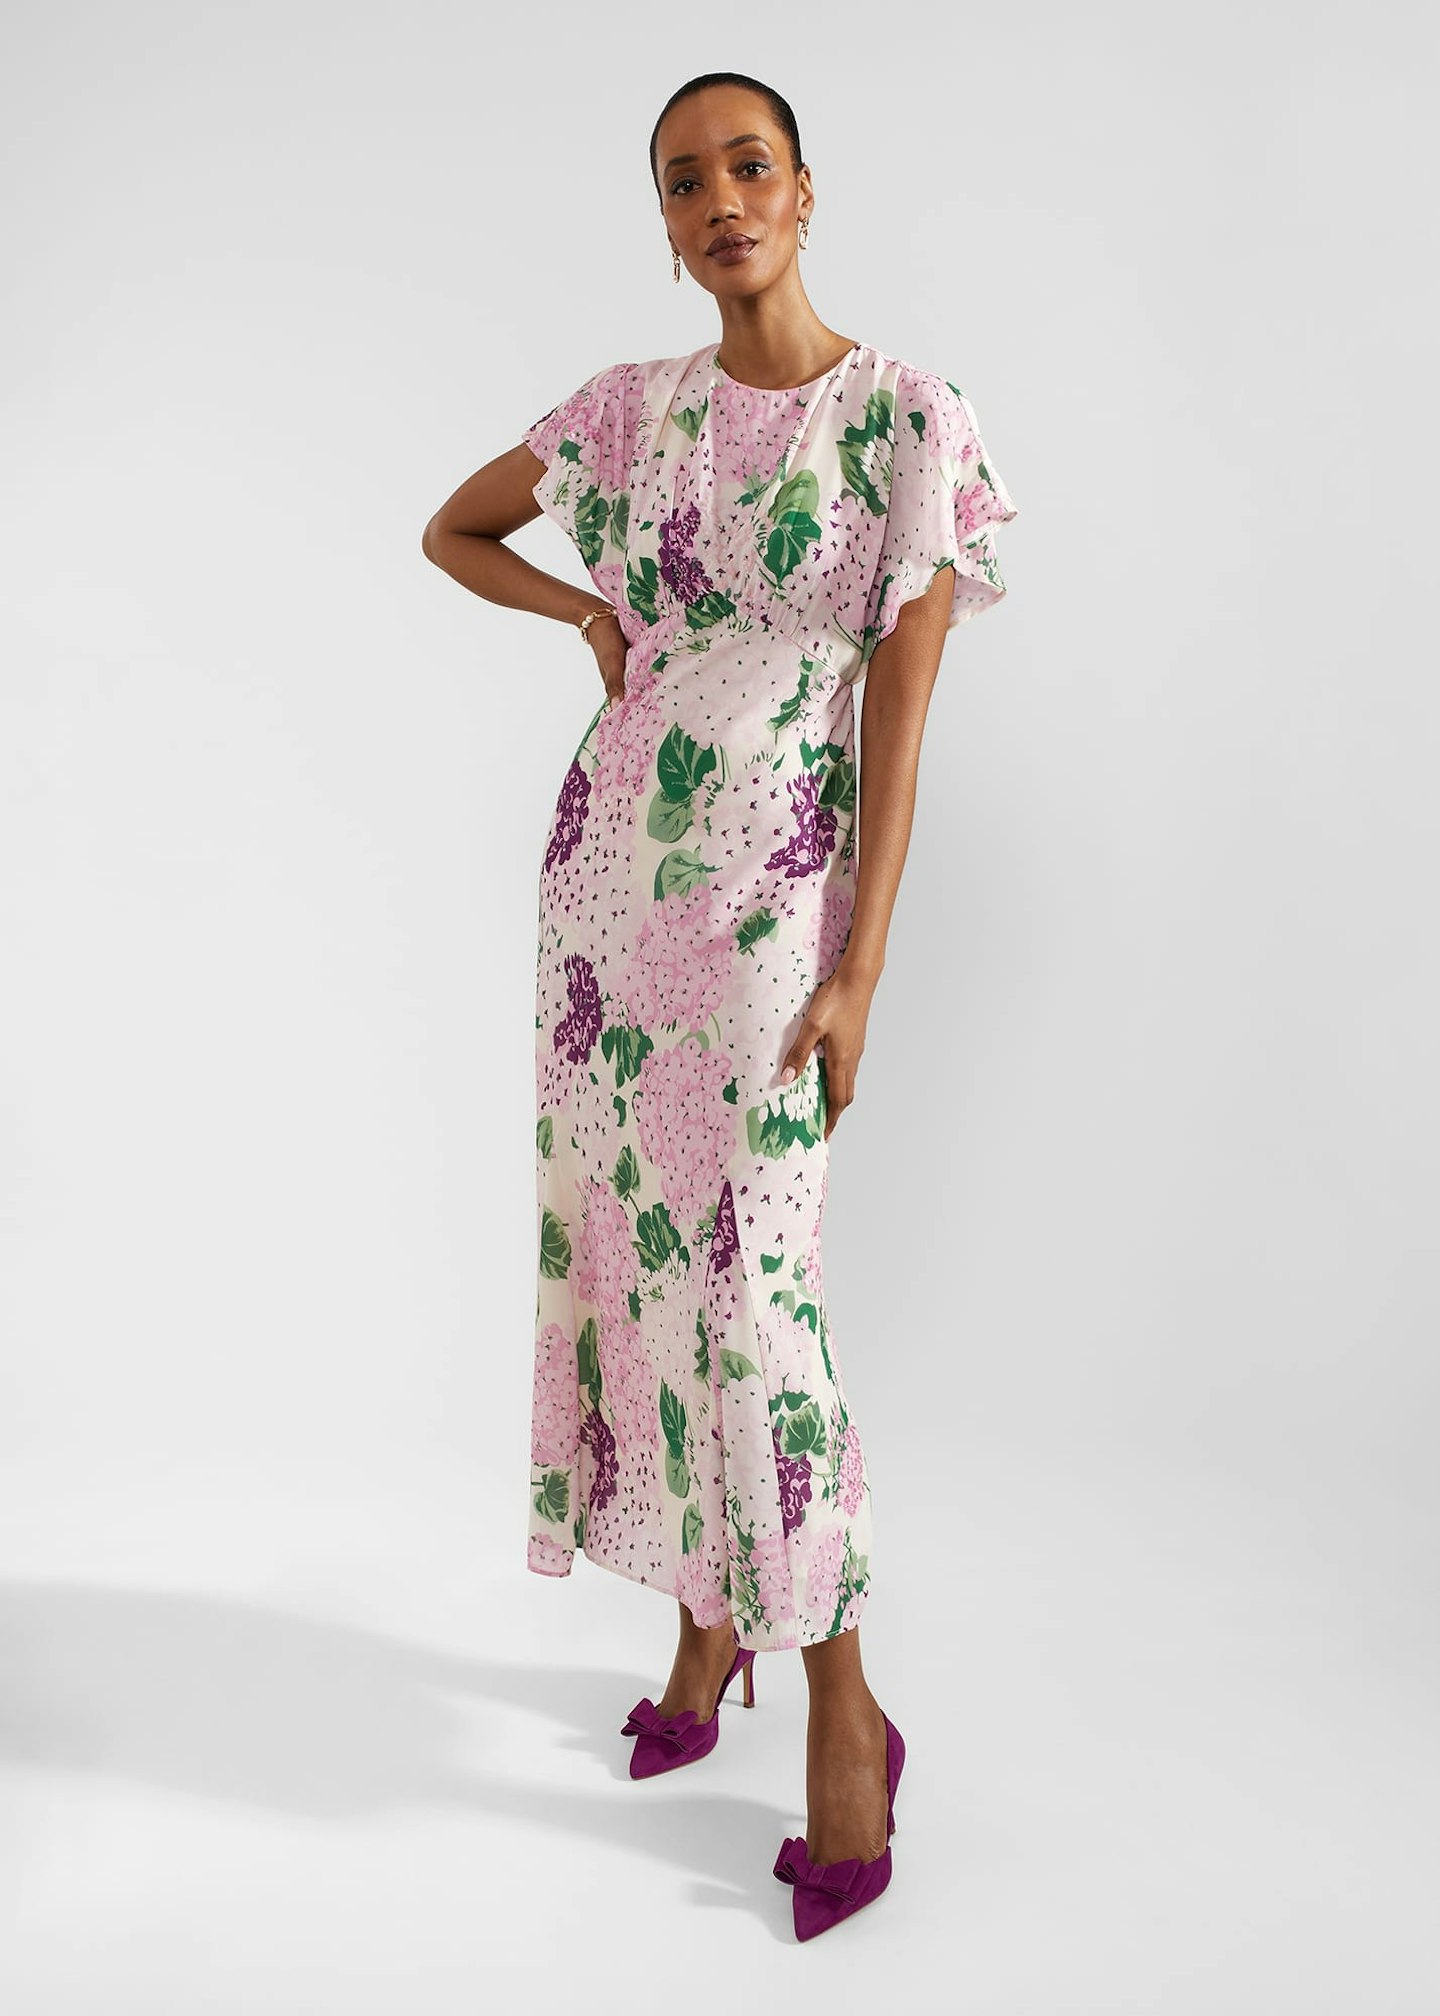 Hobbs, Lalena Sequin Floral Dress